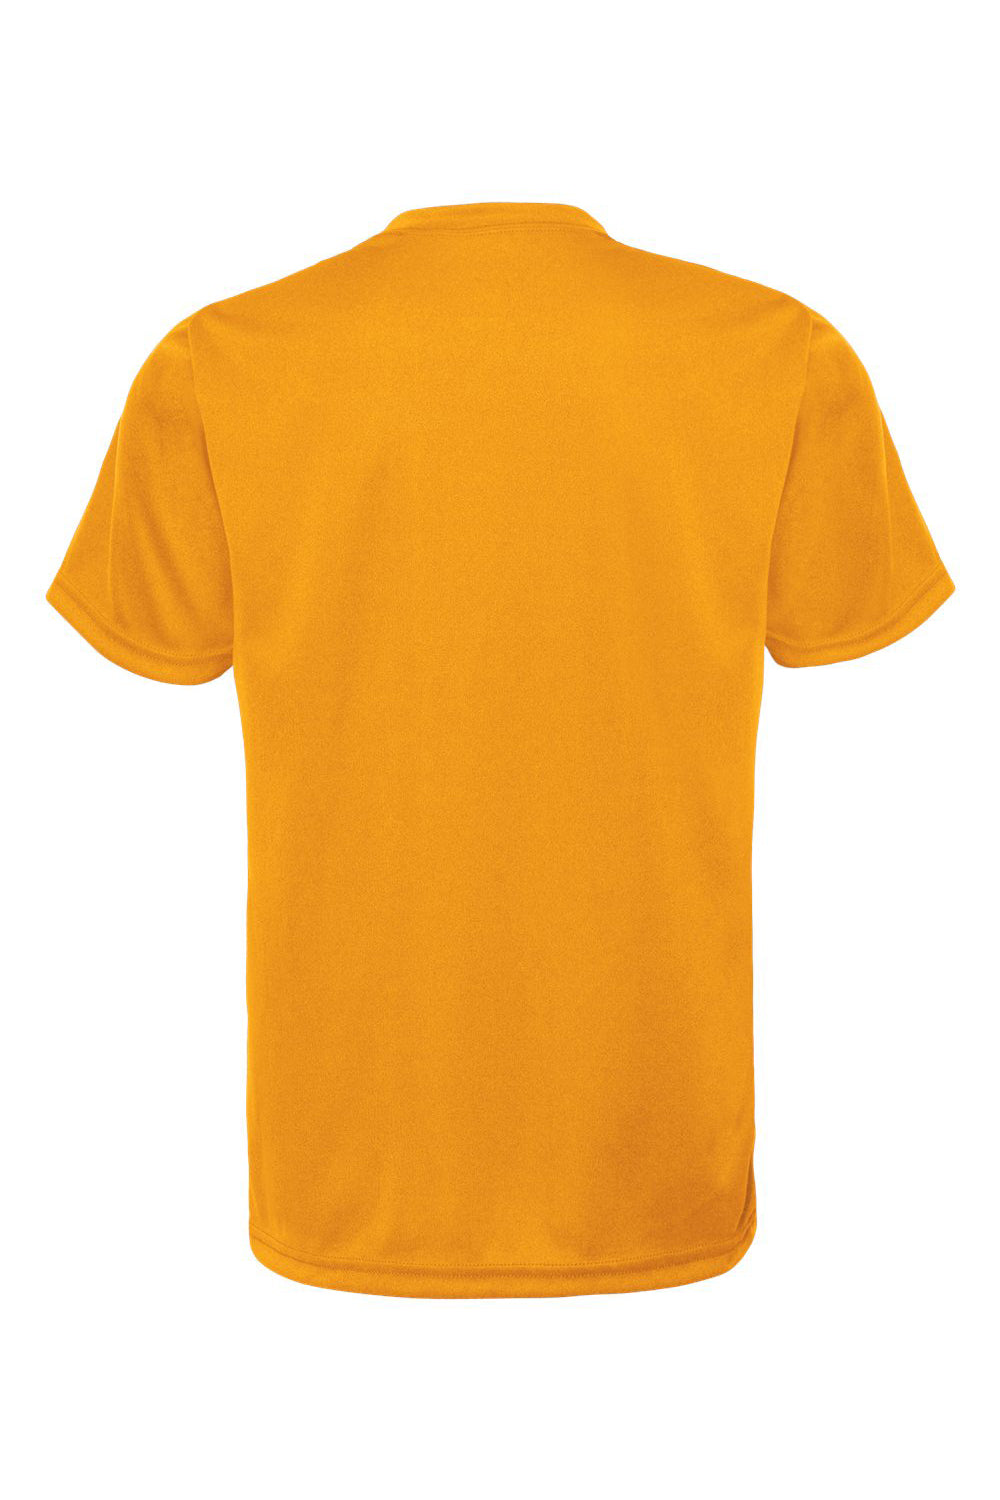 C2 Sport 5200 Youth Performance Moisture Wicking Short Sleeve Crewneck T-Shirt Gold Flat Back